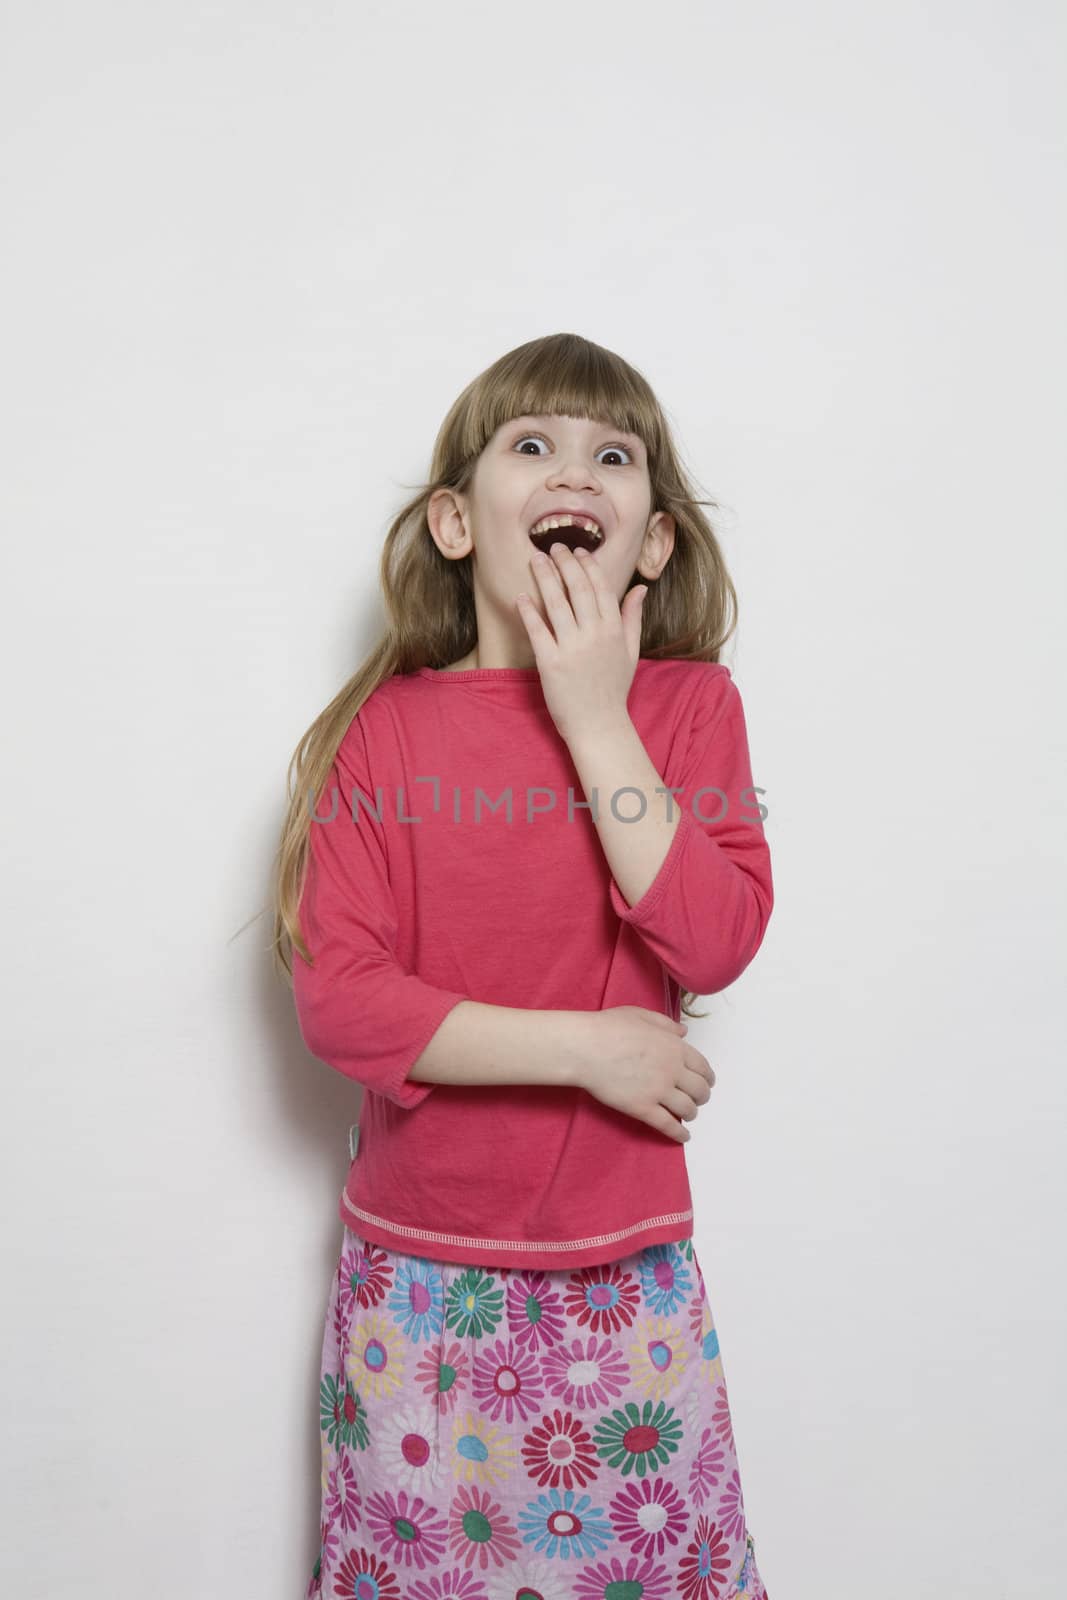 astonished girl seven years old. by elenarostunova